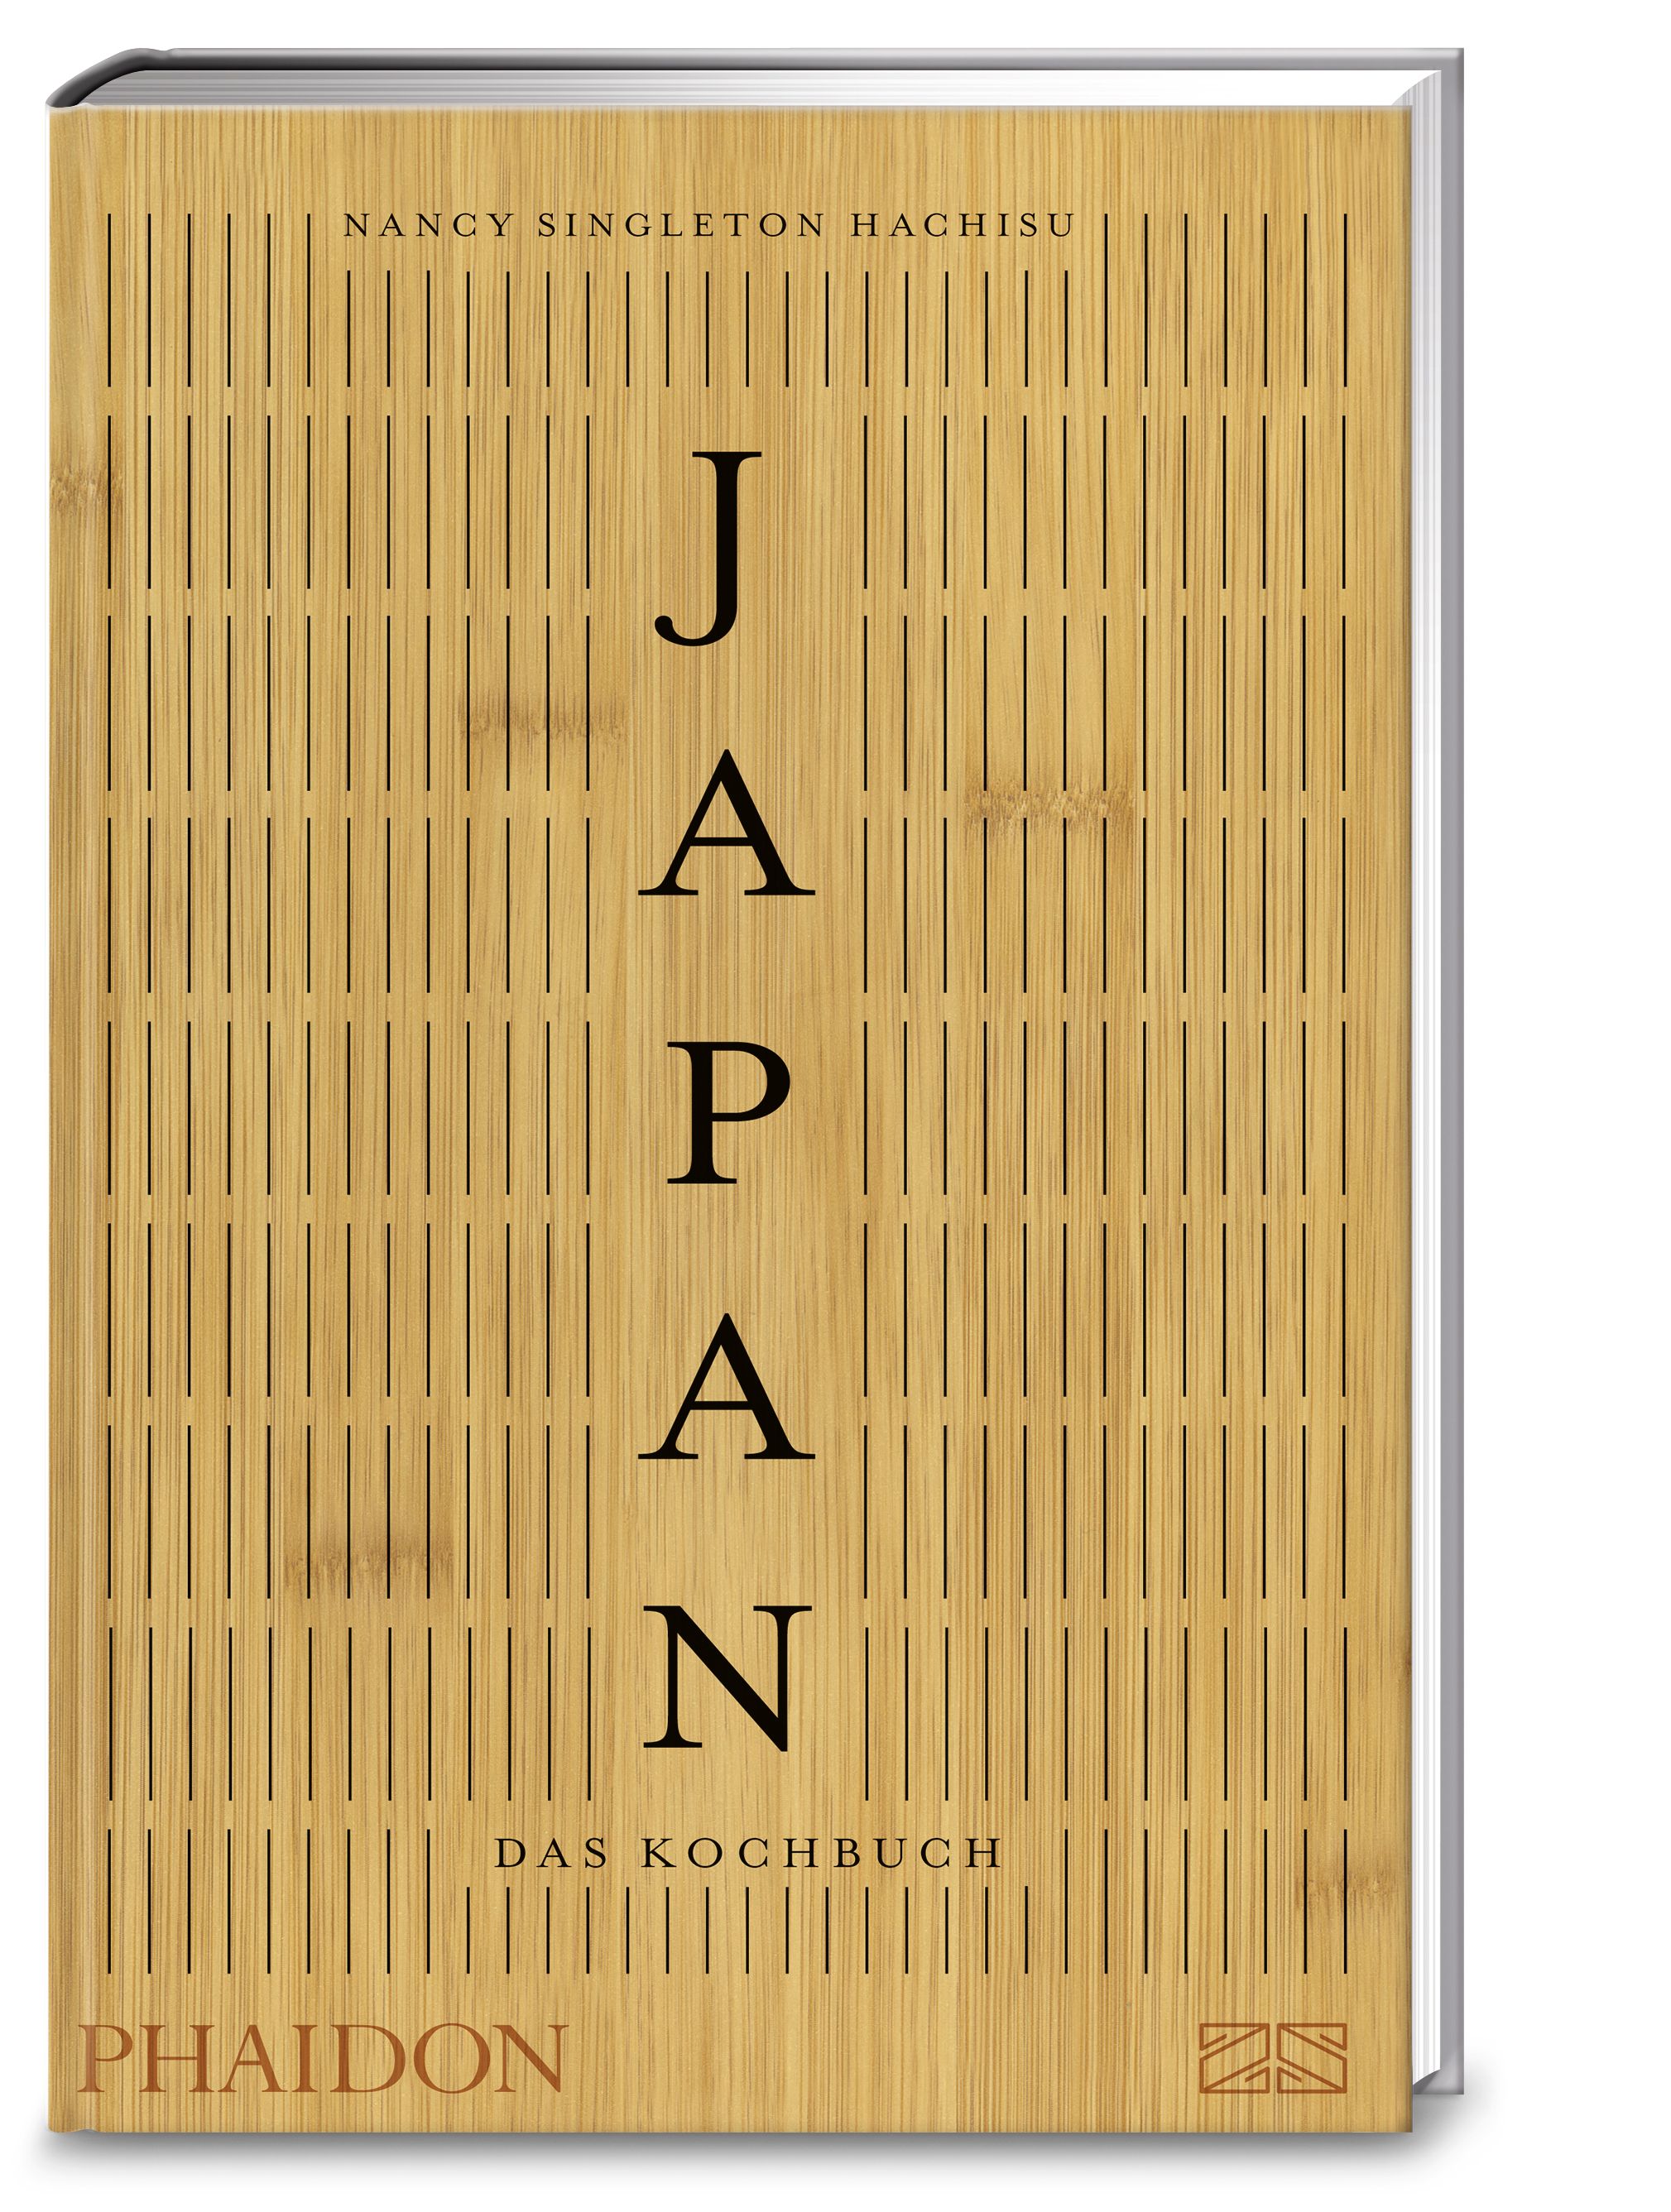 Japan – das Kochbuch